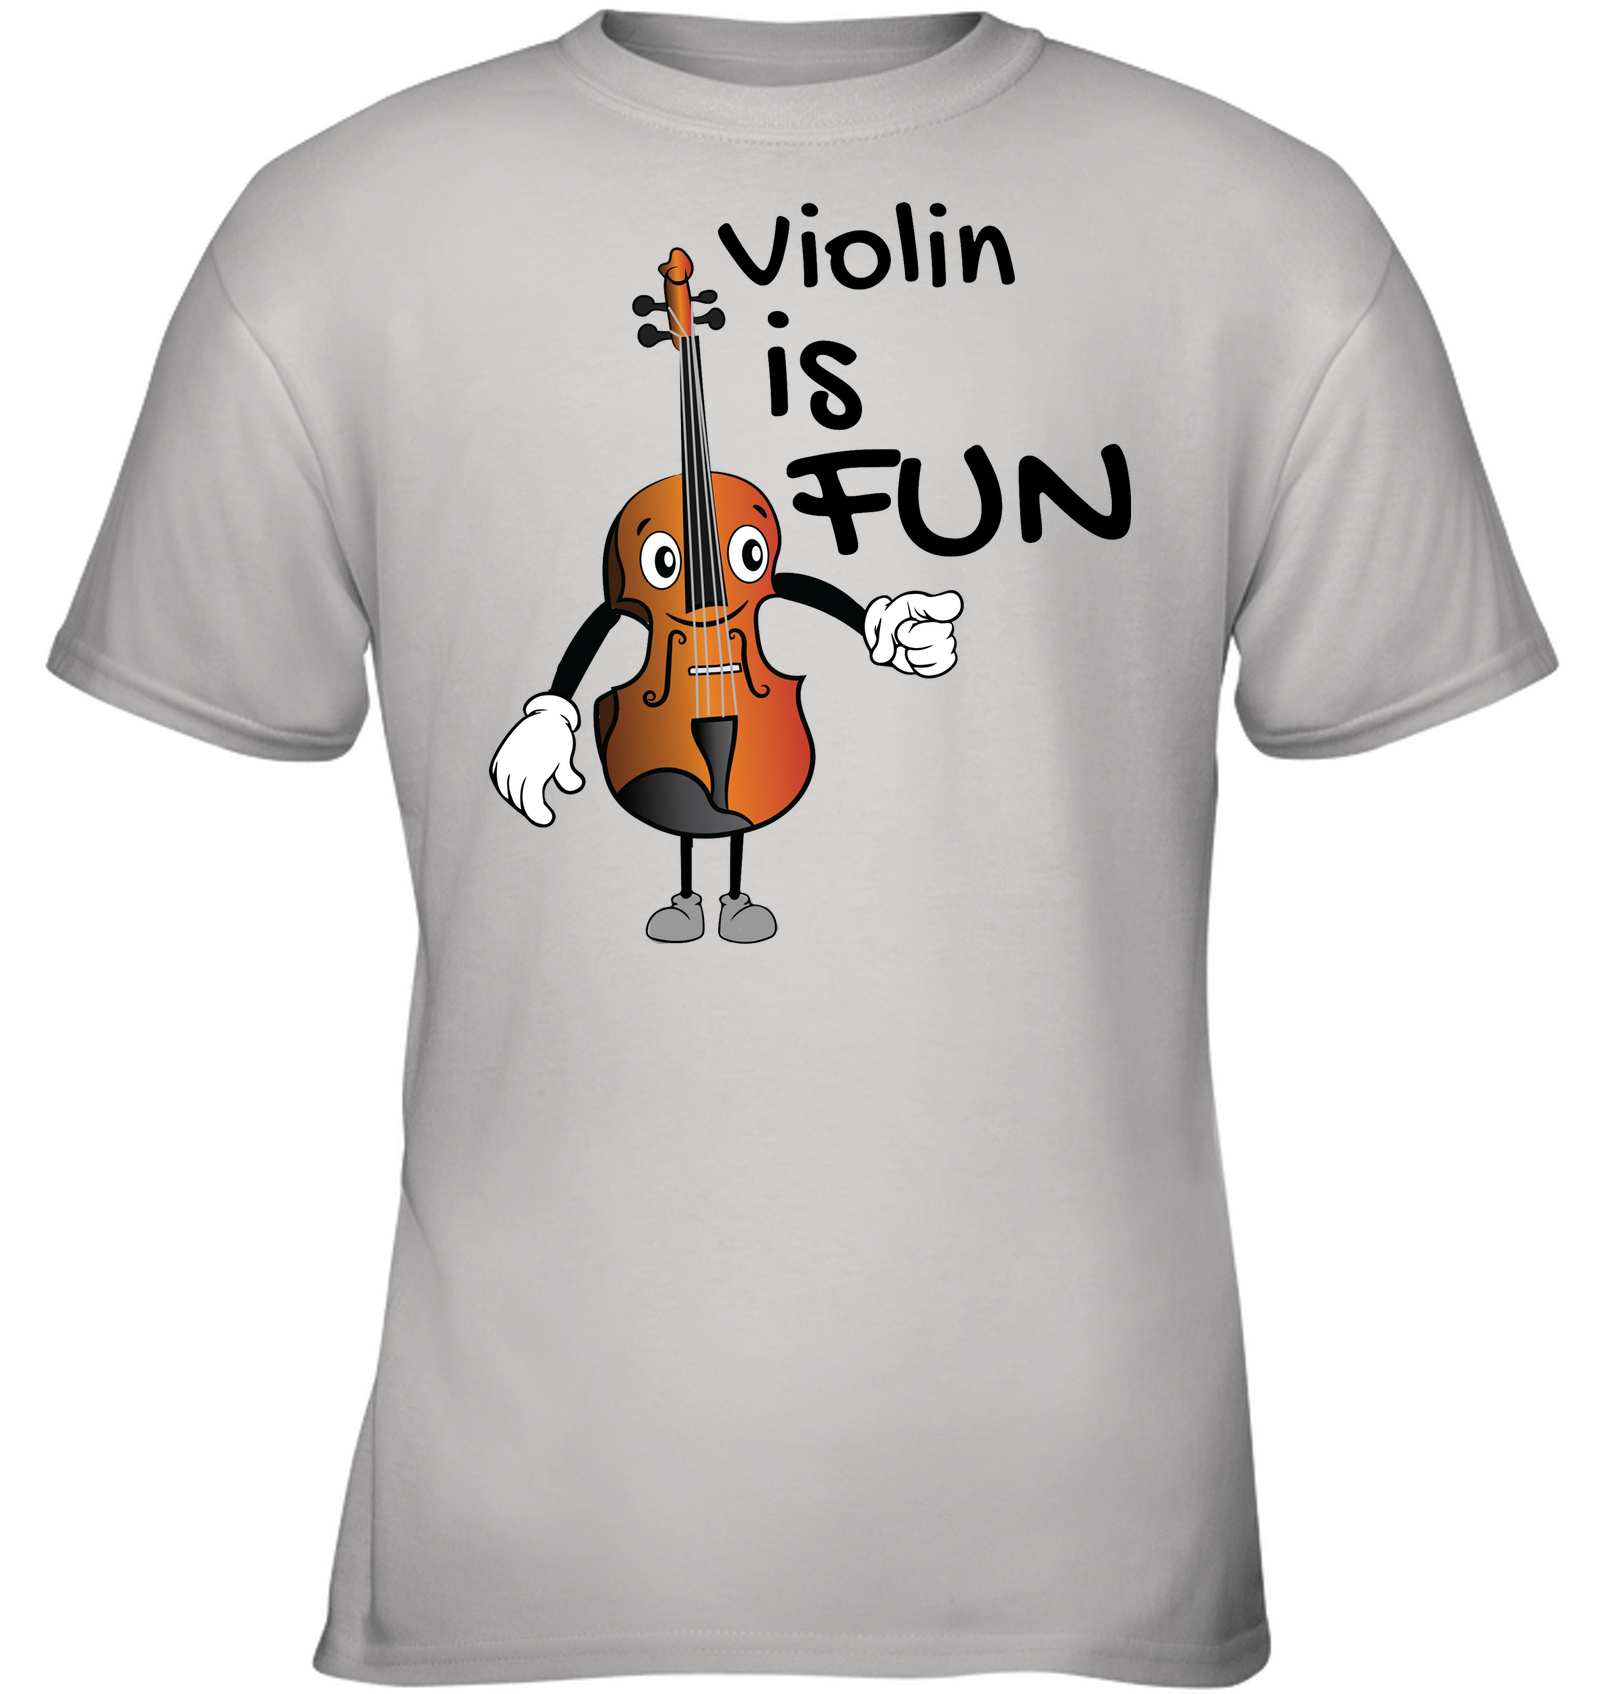 Violin is Fun - Gildan Youth Short Sleeve T-Shirt